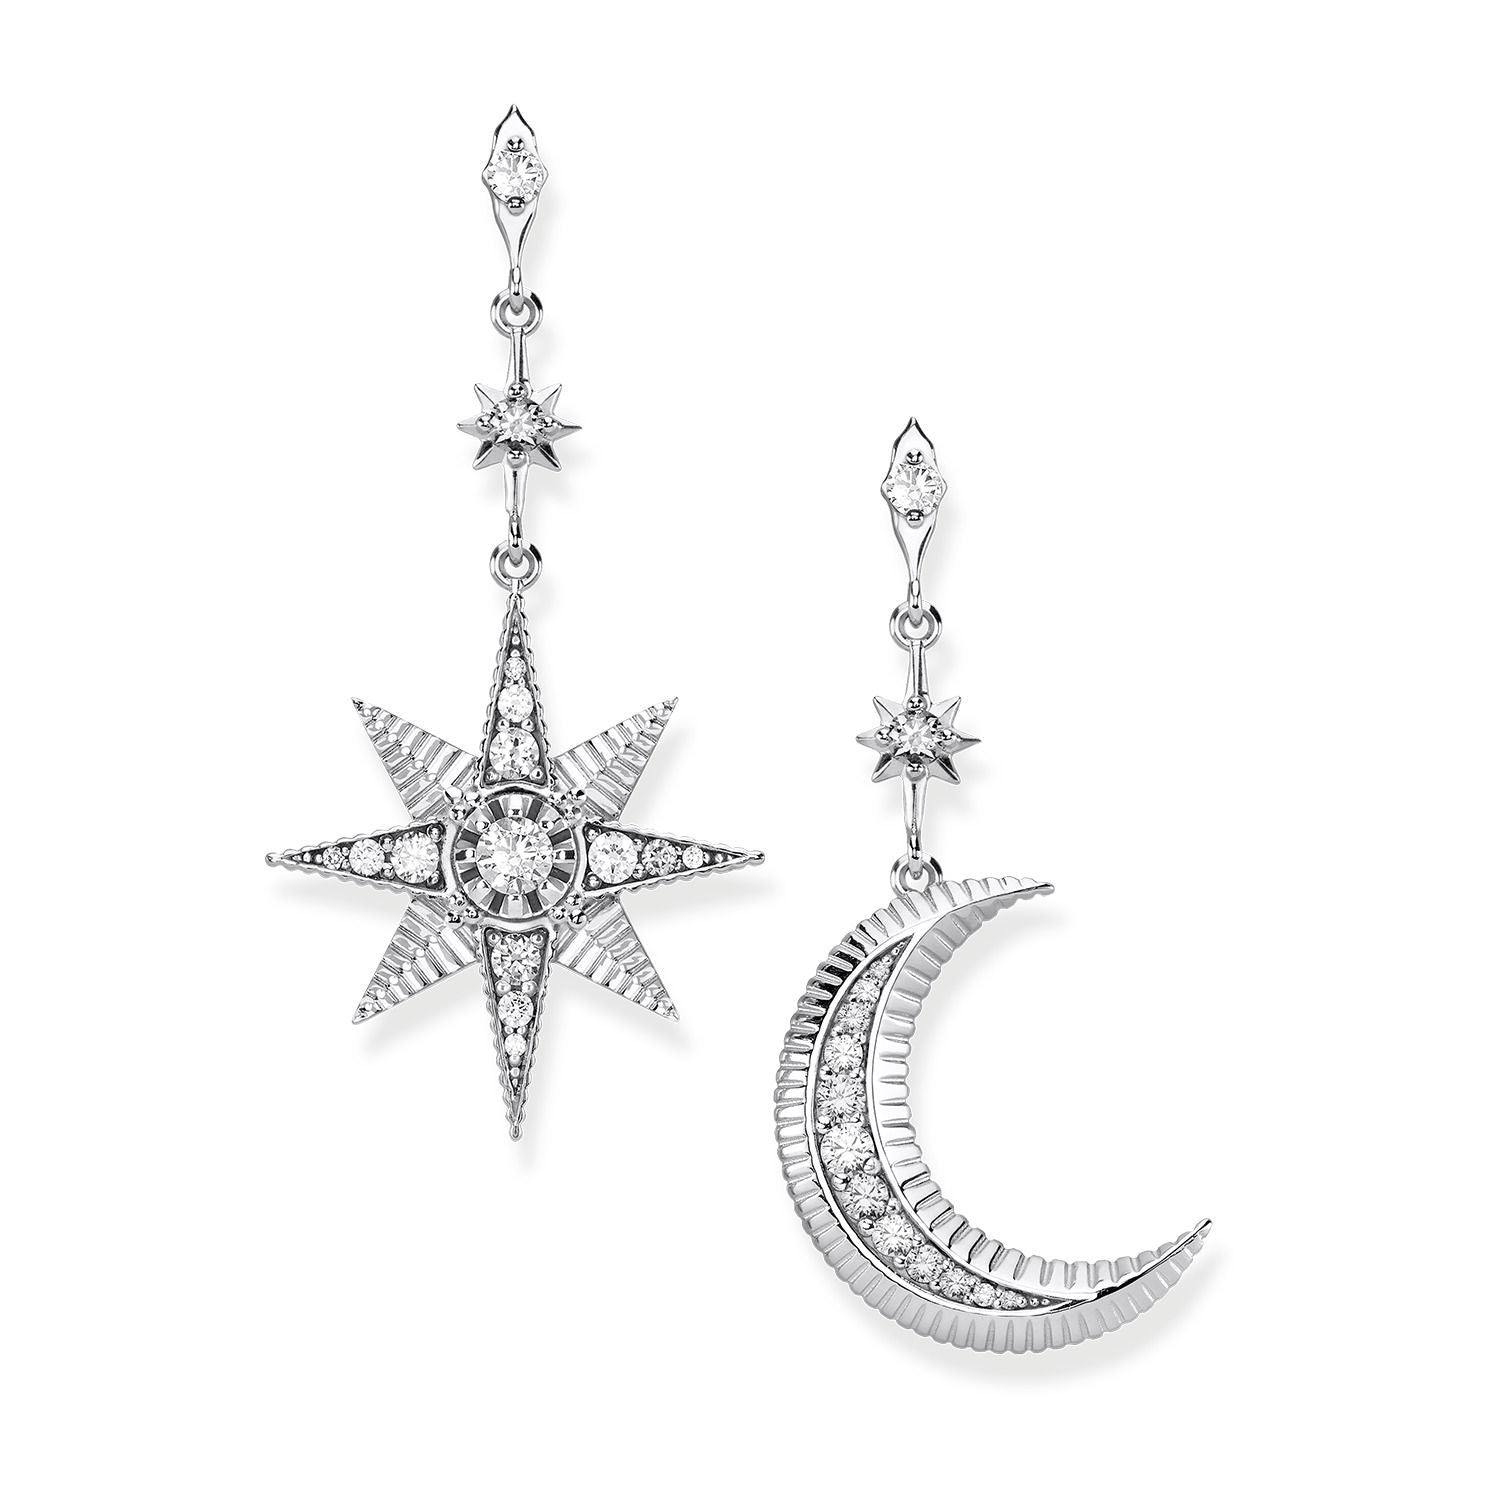 Earrings "Royalty Star & Moon" - Silver Sterling Silver Thomas Sabo